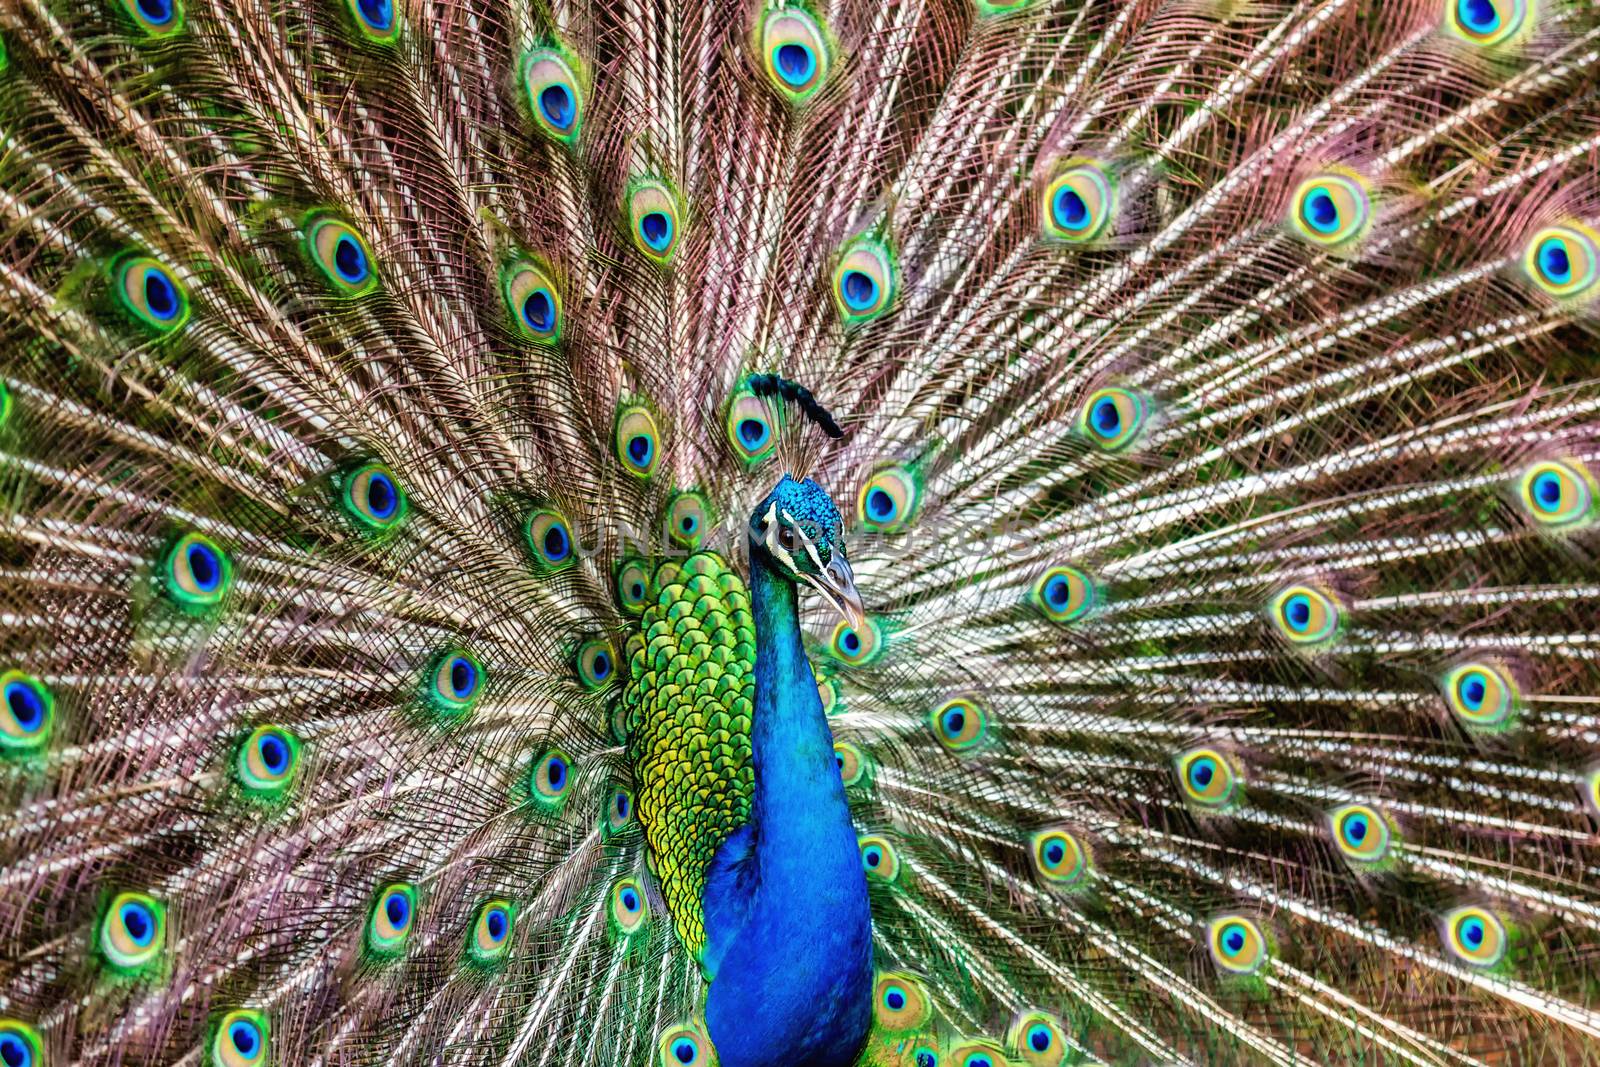 A peacock displays its beautiful feathers in Kauai, Hawaii.